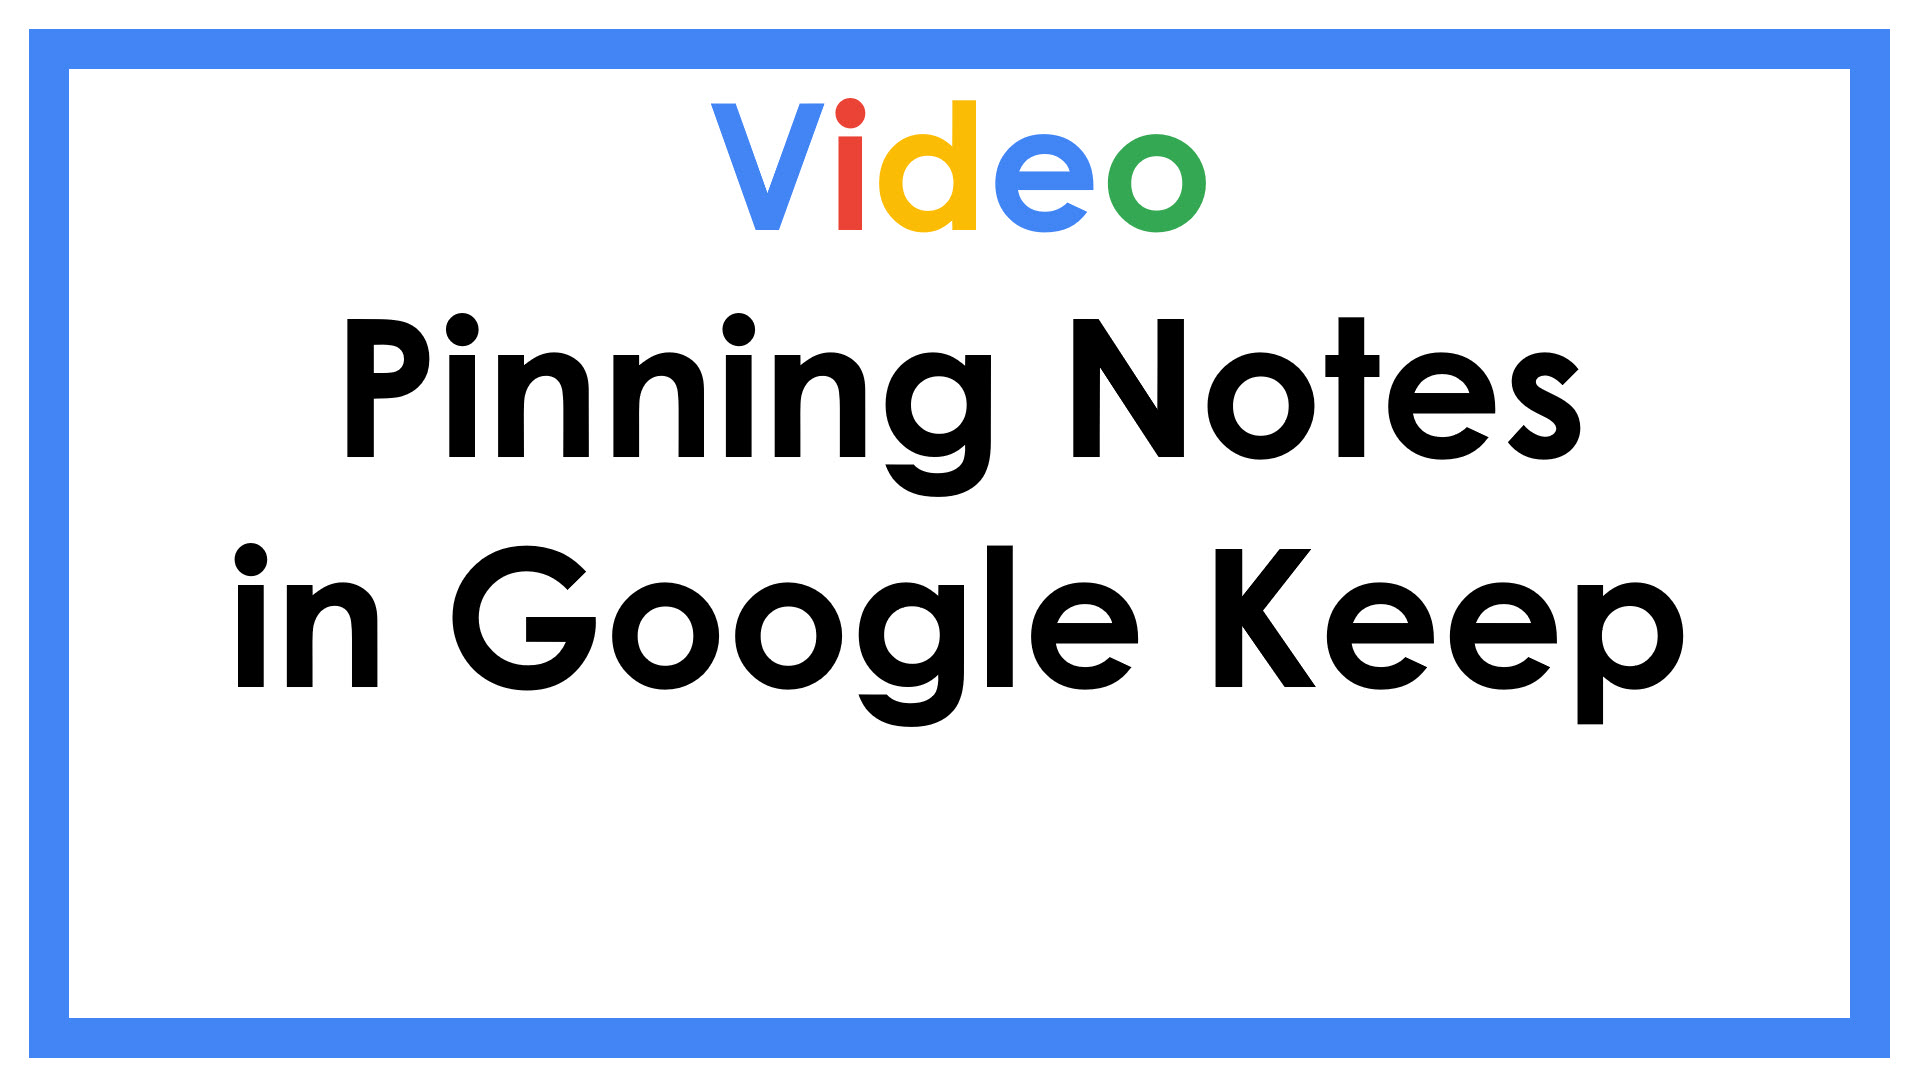 Pinning Notes in Google Keep